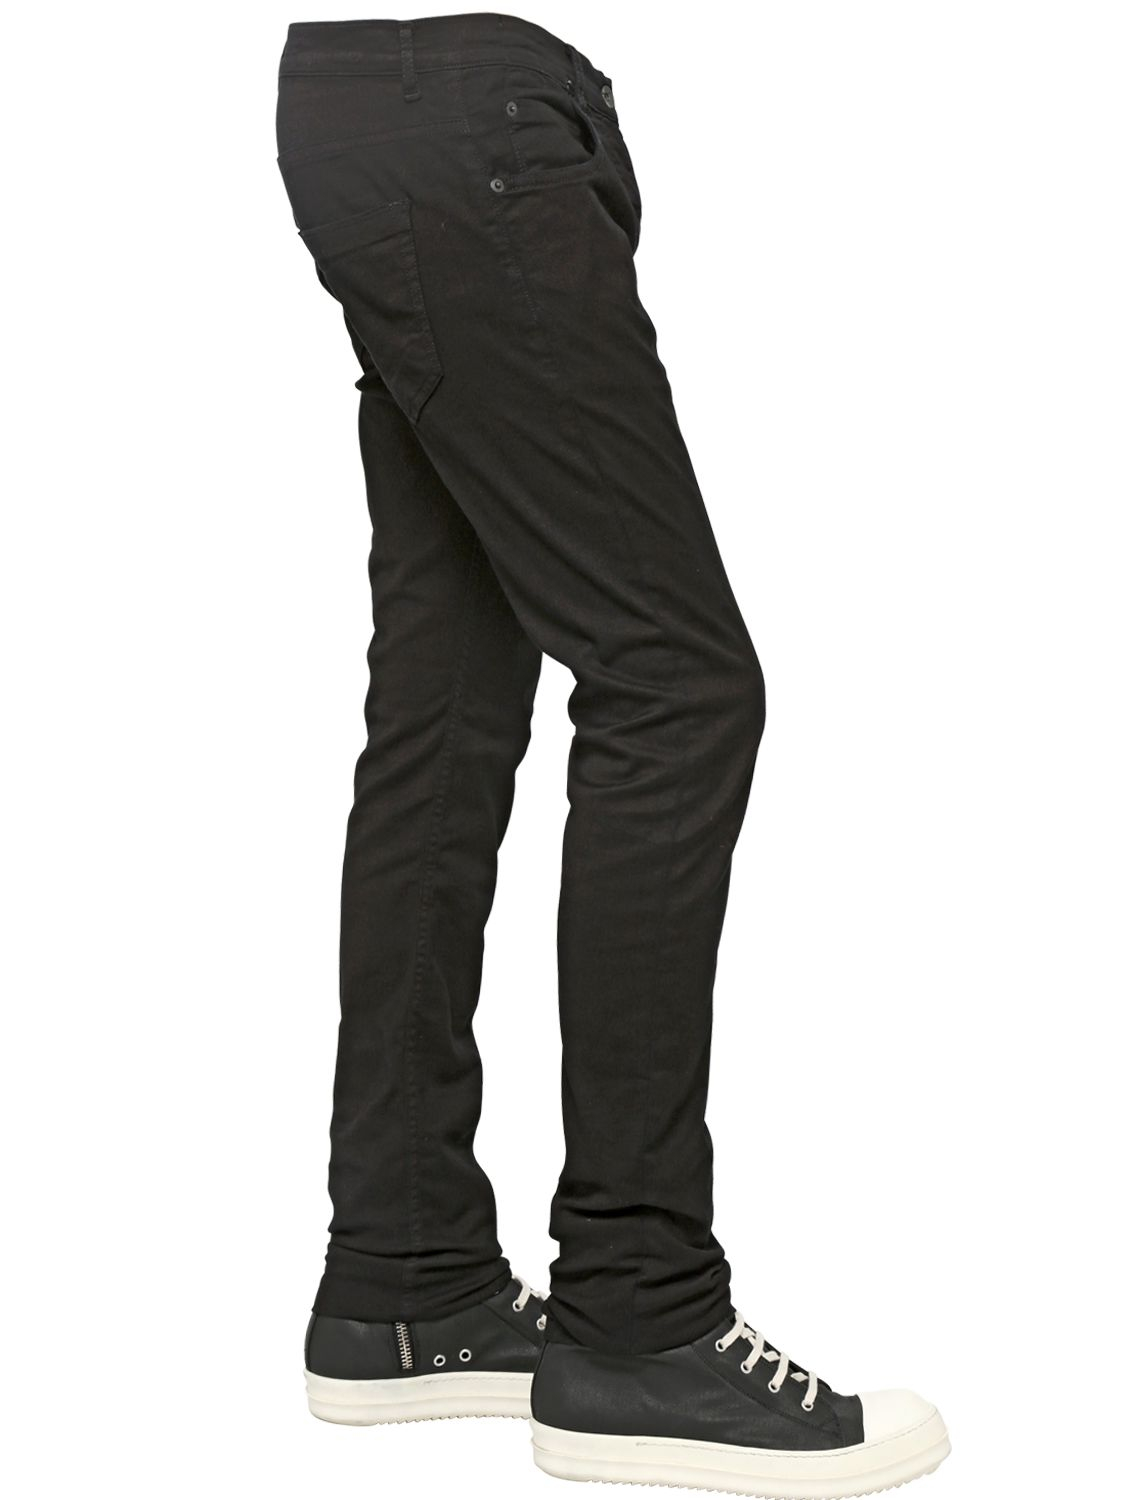 Rick Owens Drkshdw 17Cm Stretch Cotton Denim Jeans in Black for Men - Lyst